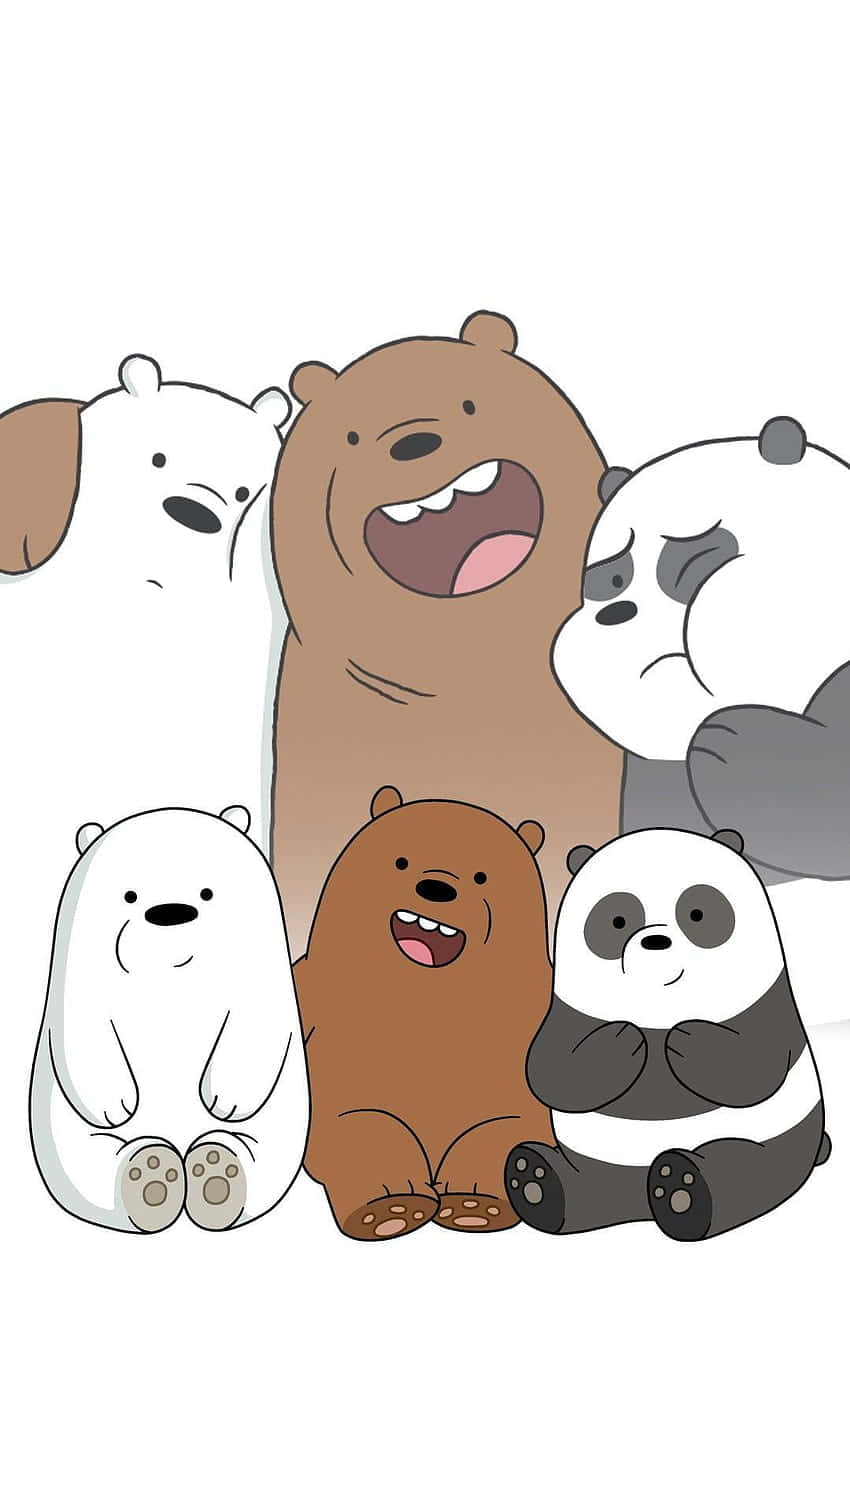 Cute We Bare Bears Cartoon Network Wallpaper